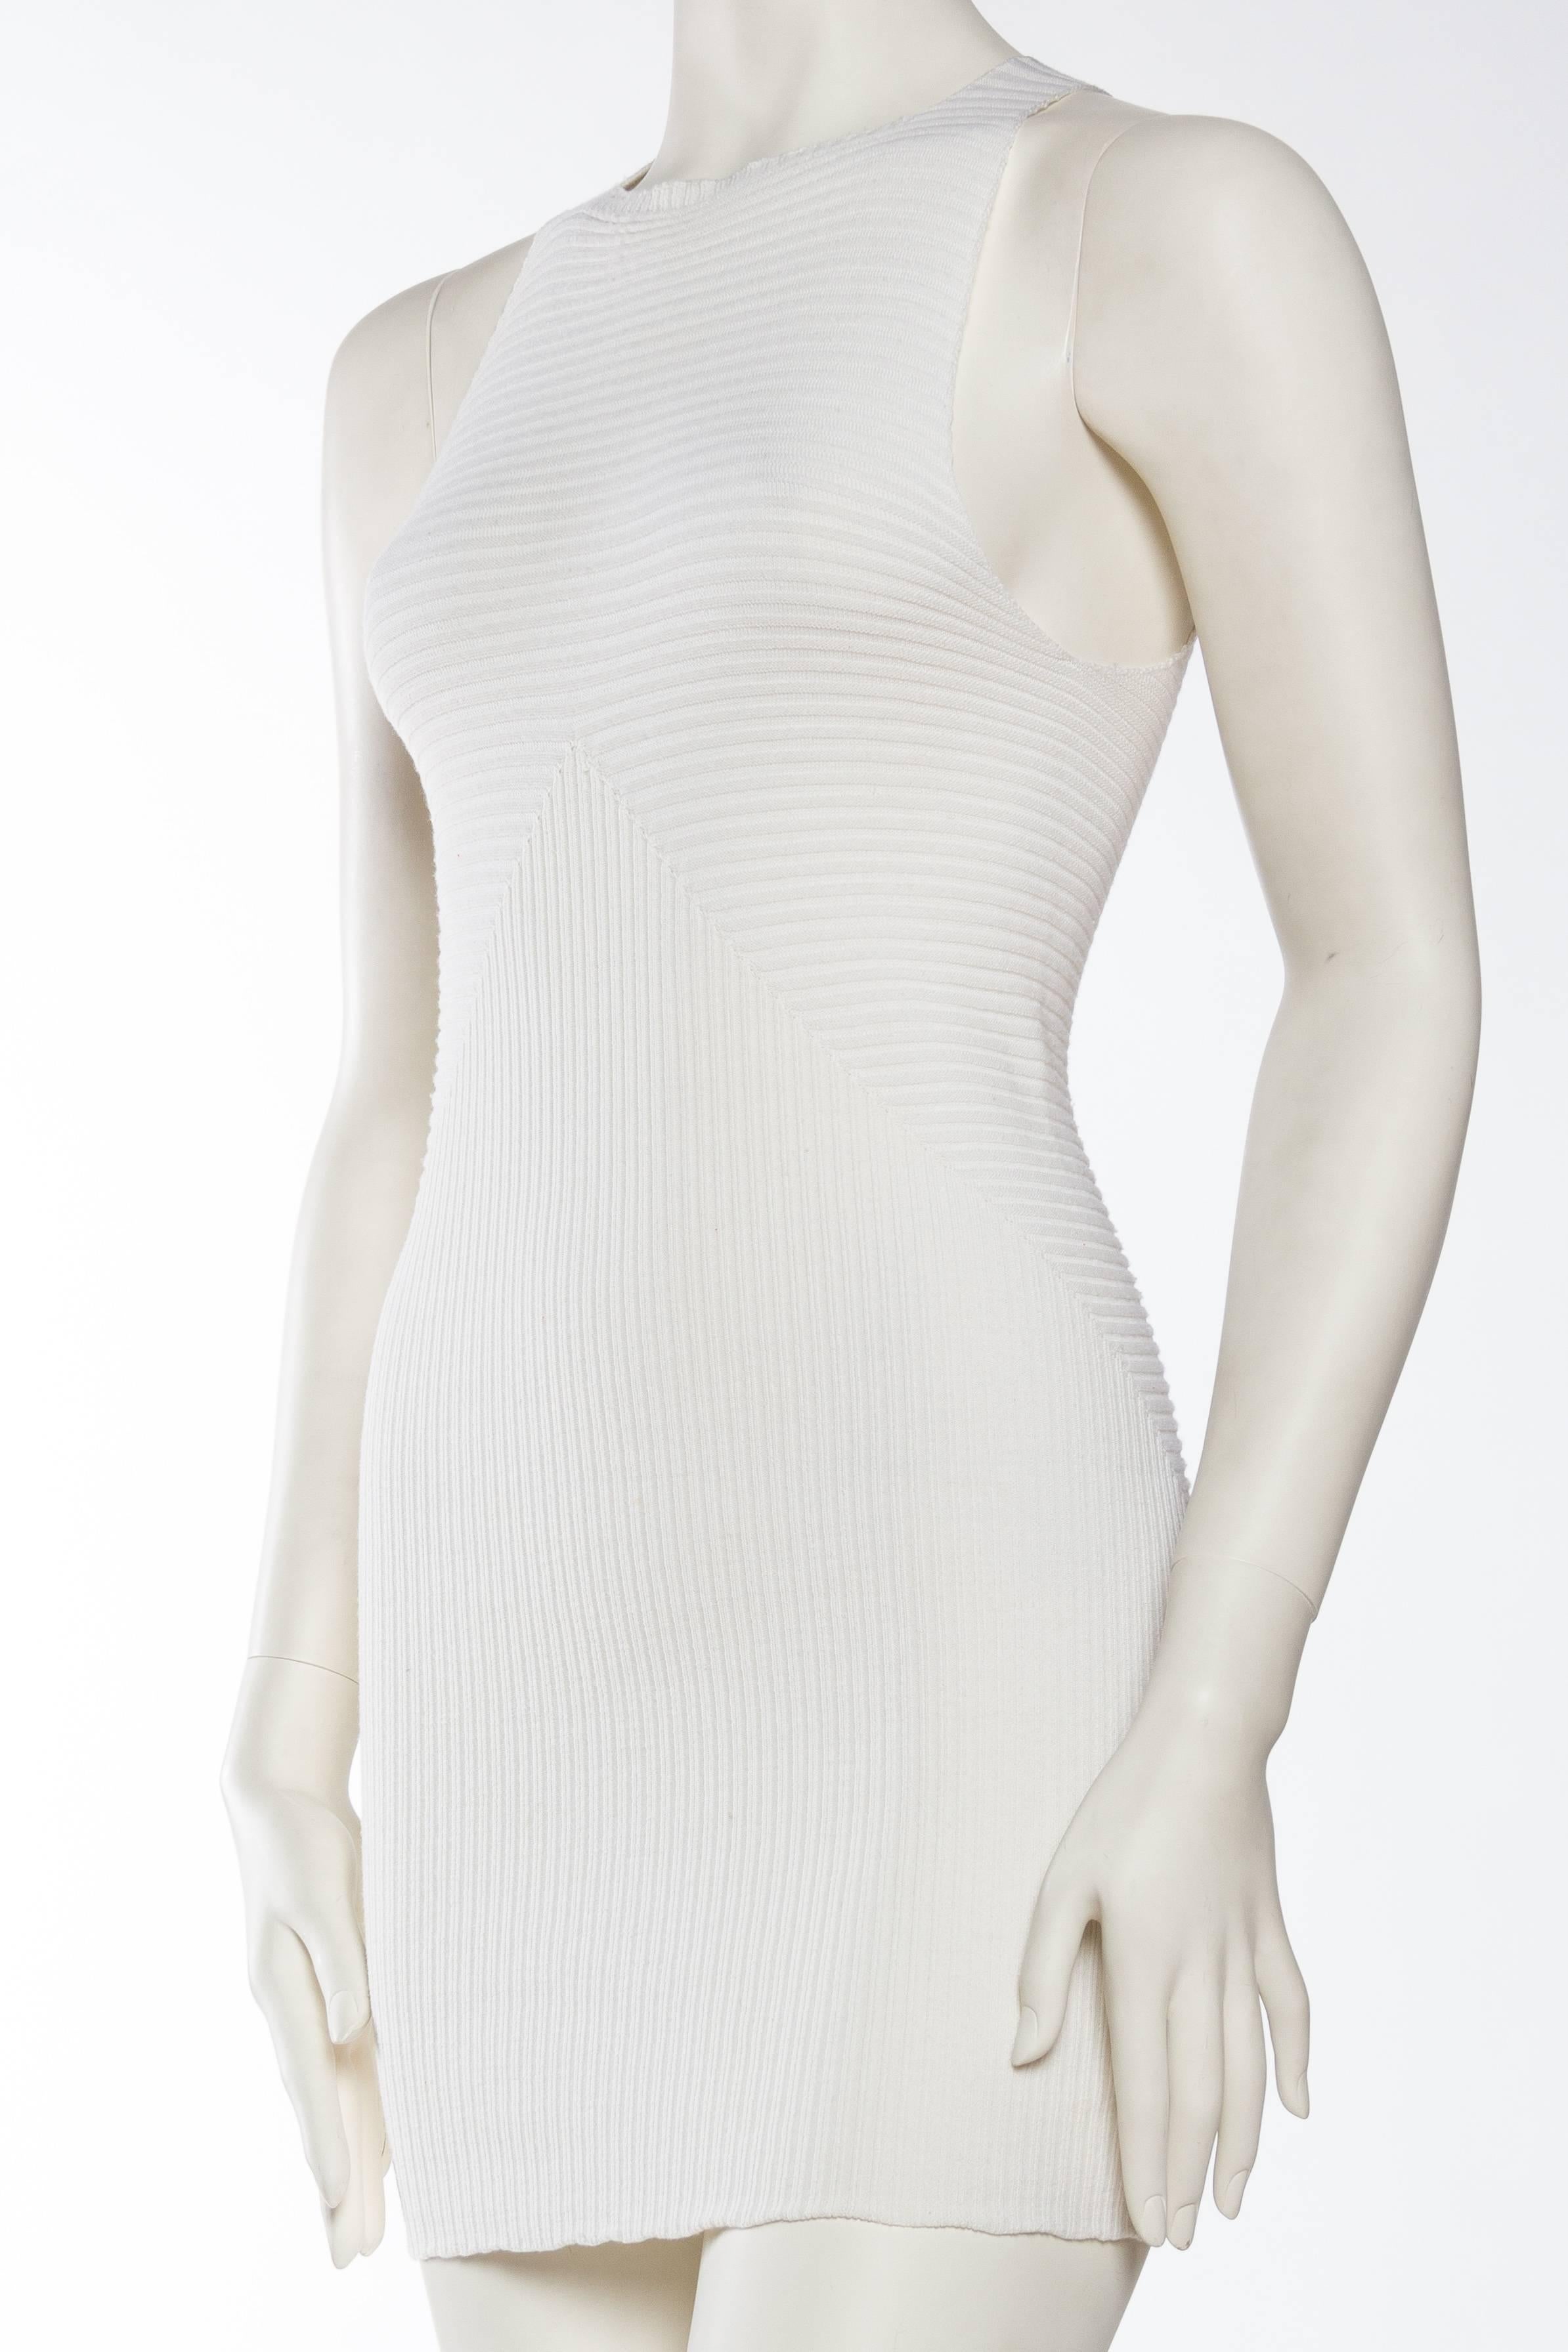 Rick Owens Body-Con Minimalist Little White Dress 1